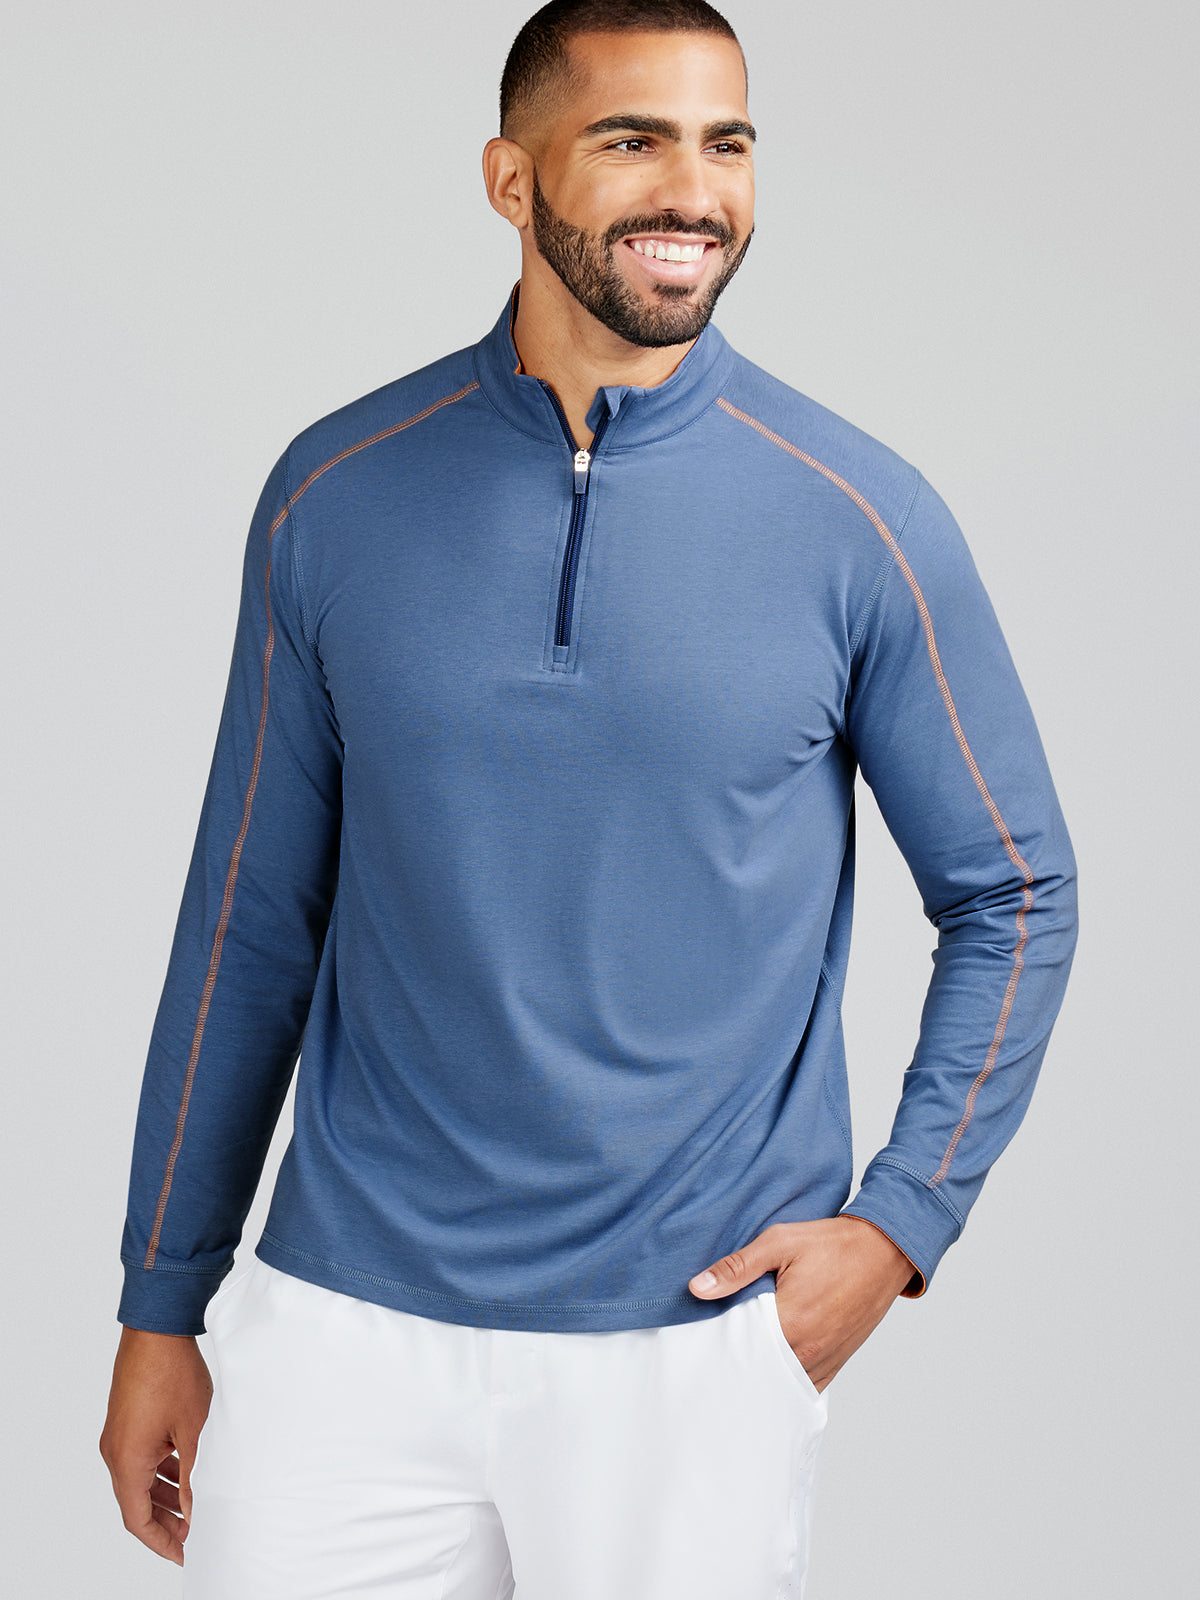 All in Motion Men's Soft Gym Full-Zip Sweatshirt